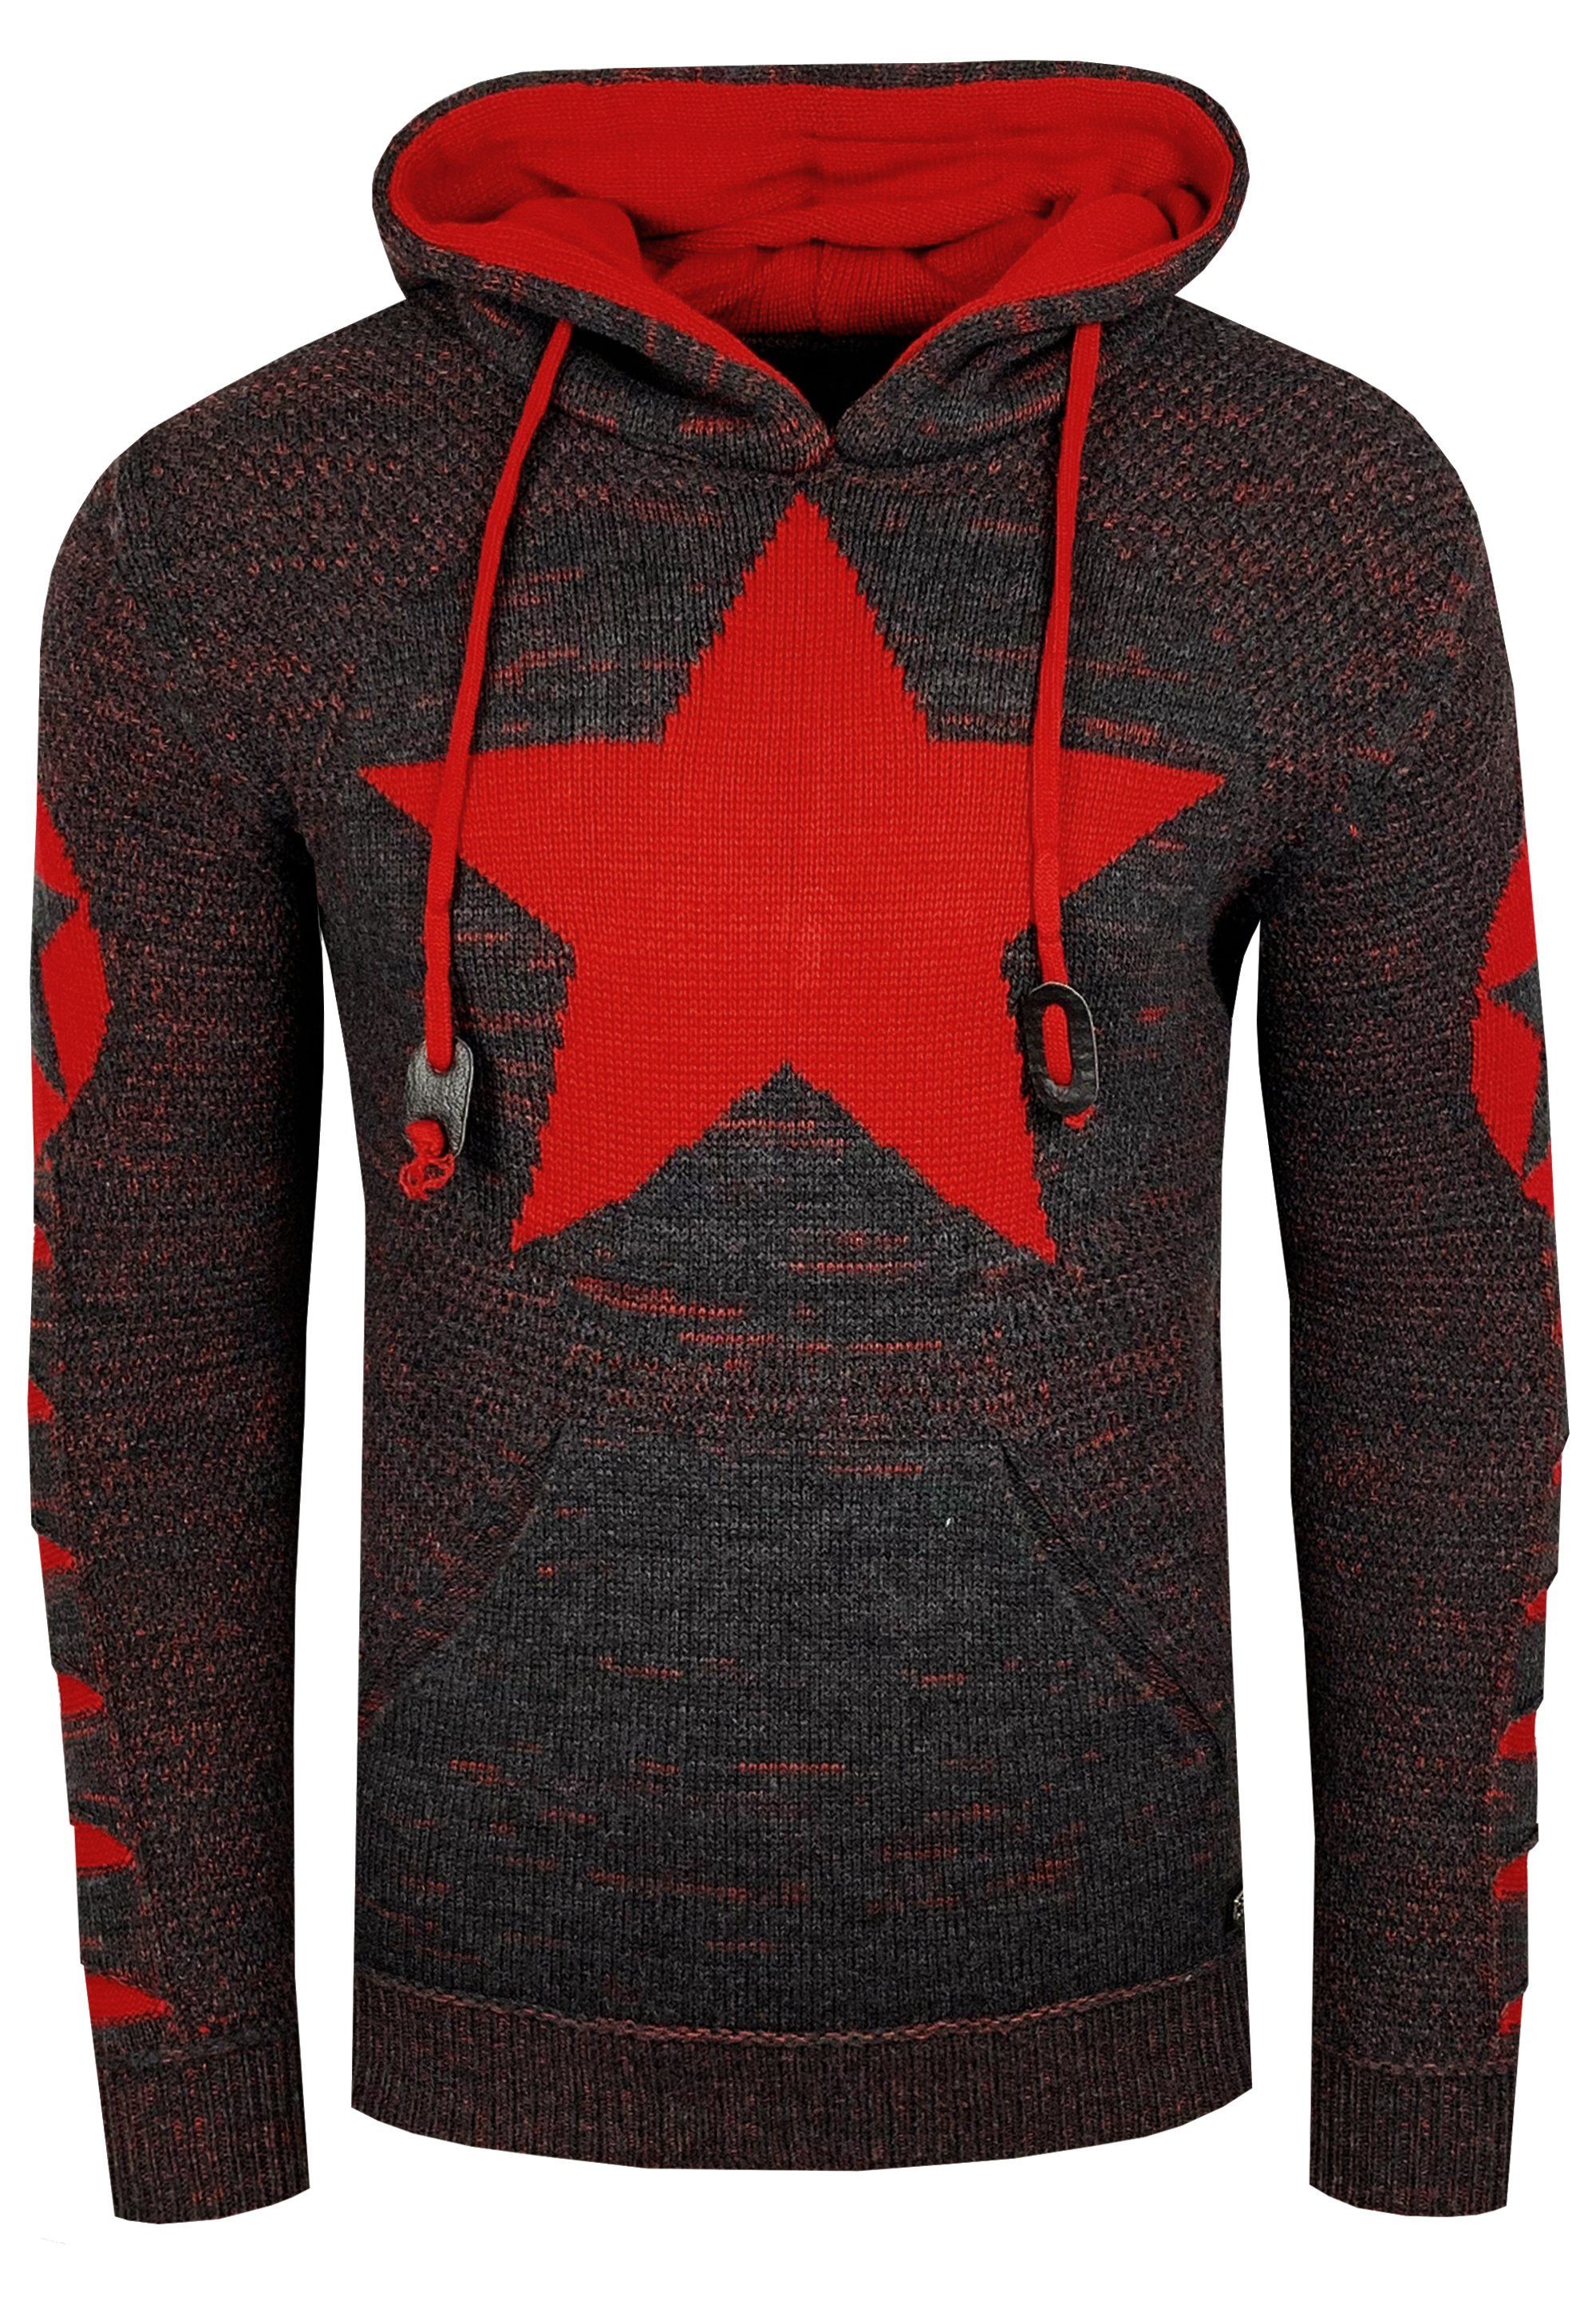 Rusty Neal Kapuzensweatshirt mit großem anthrazit-rot Stern-Design